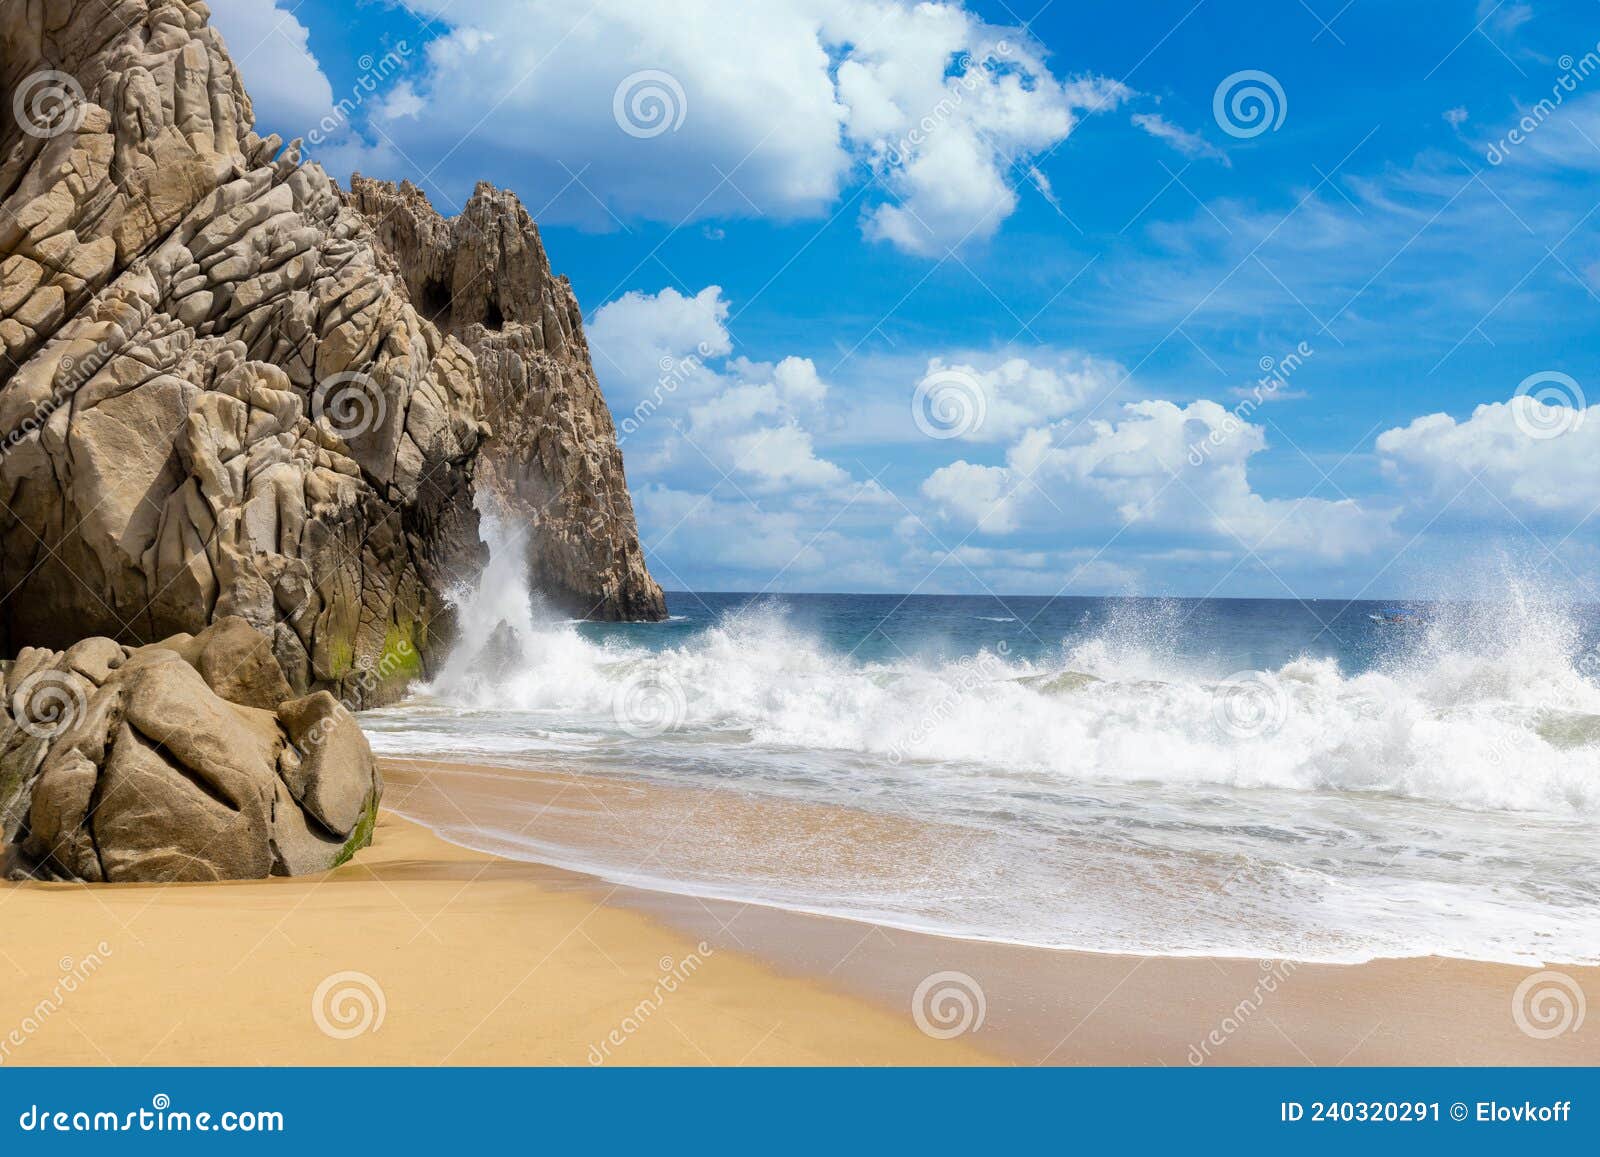 scenic los cabos travel destination playa del divorcio, divorce beach located near famous arch of cabo san lucas